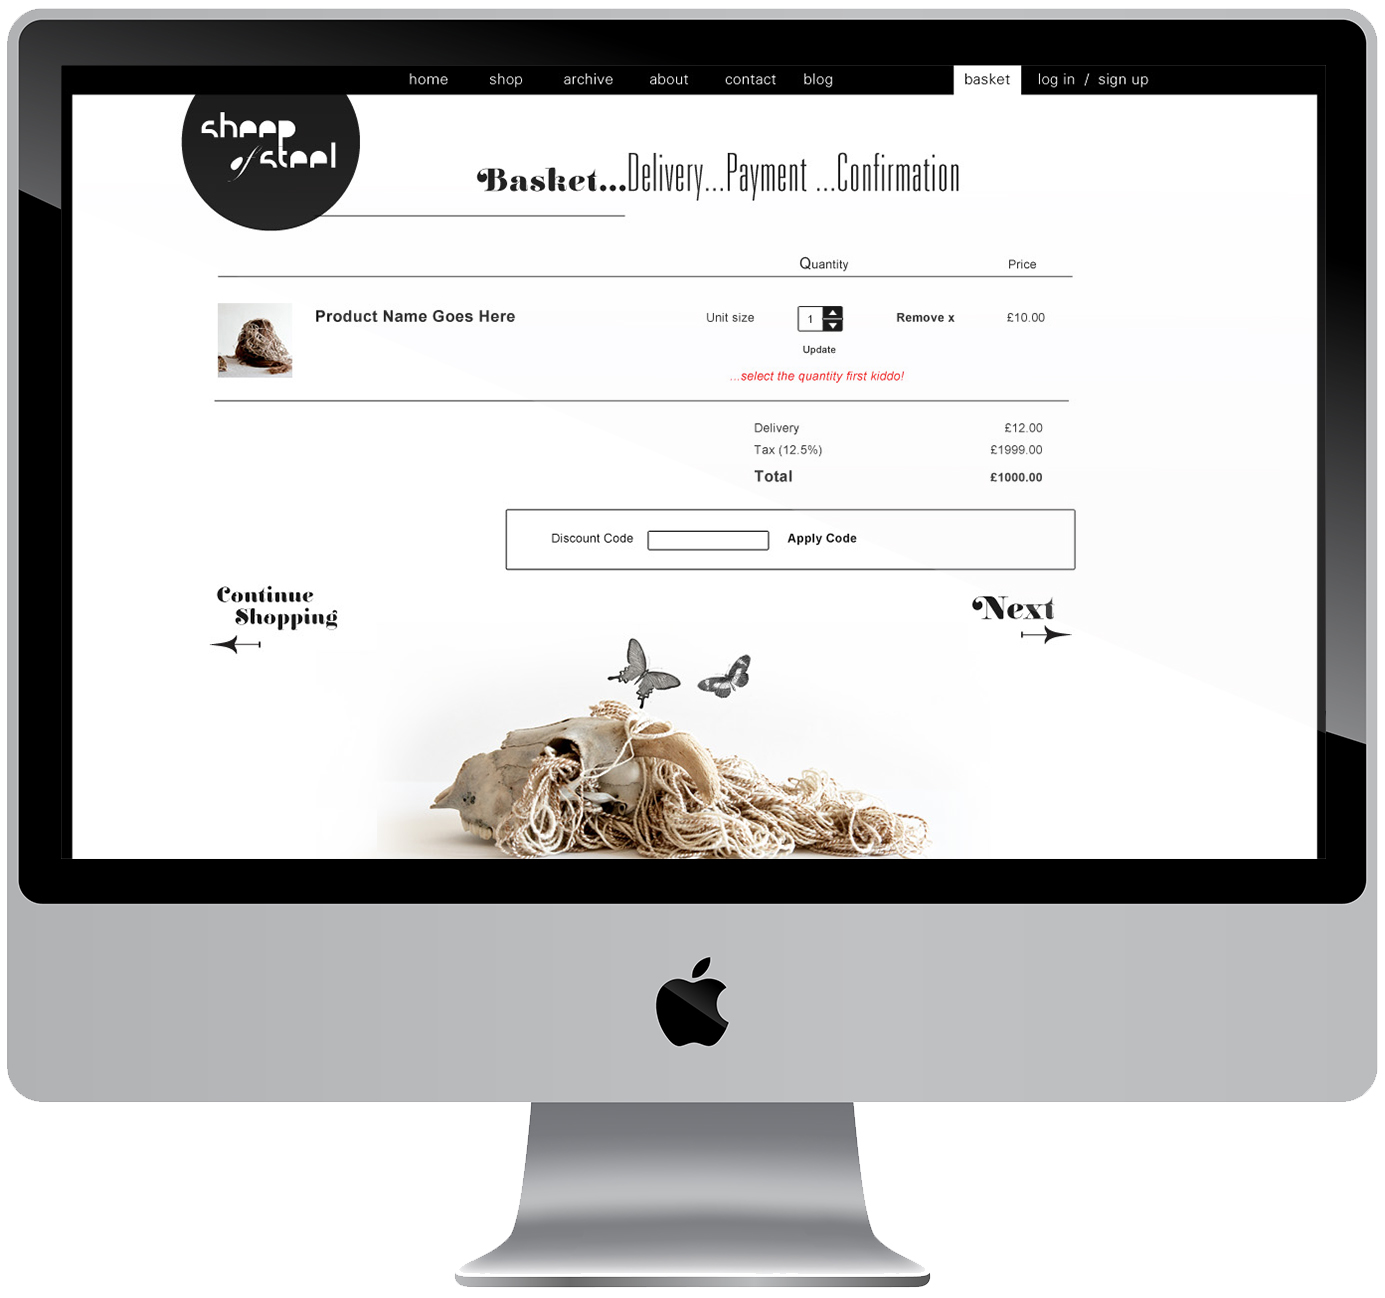 freelance_graphic_designer_London_uk_ecommerce_web_design_01_sheep_of_steel_basket